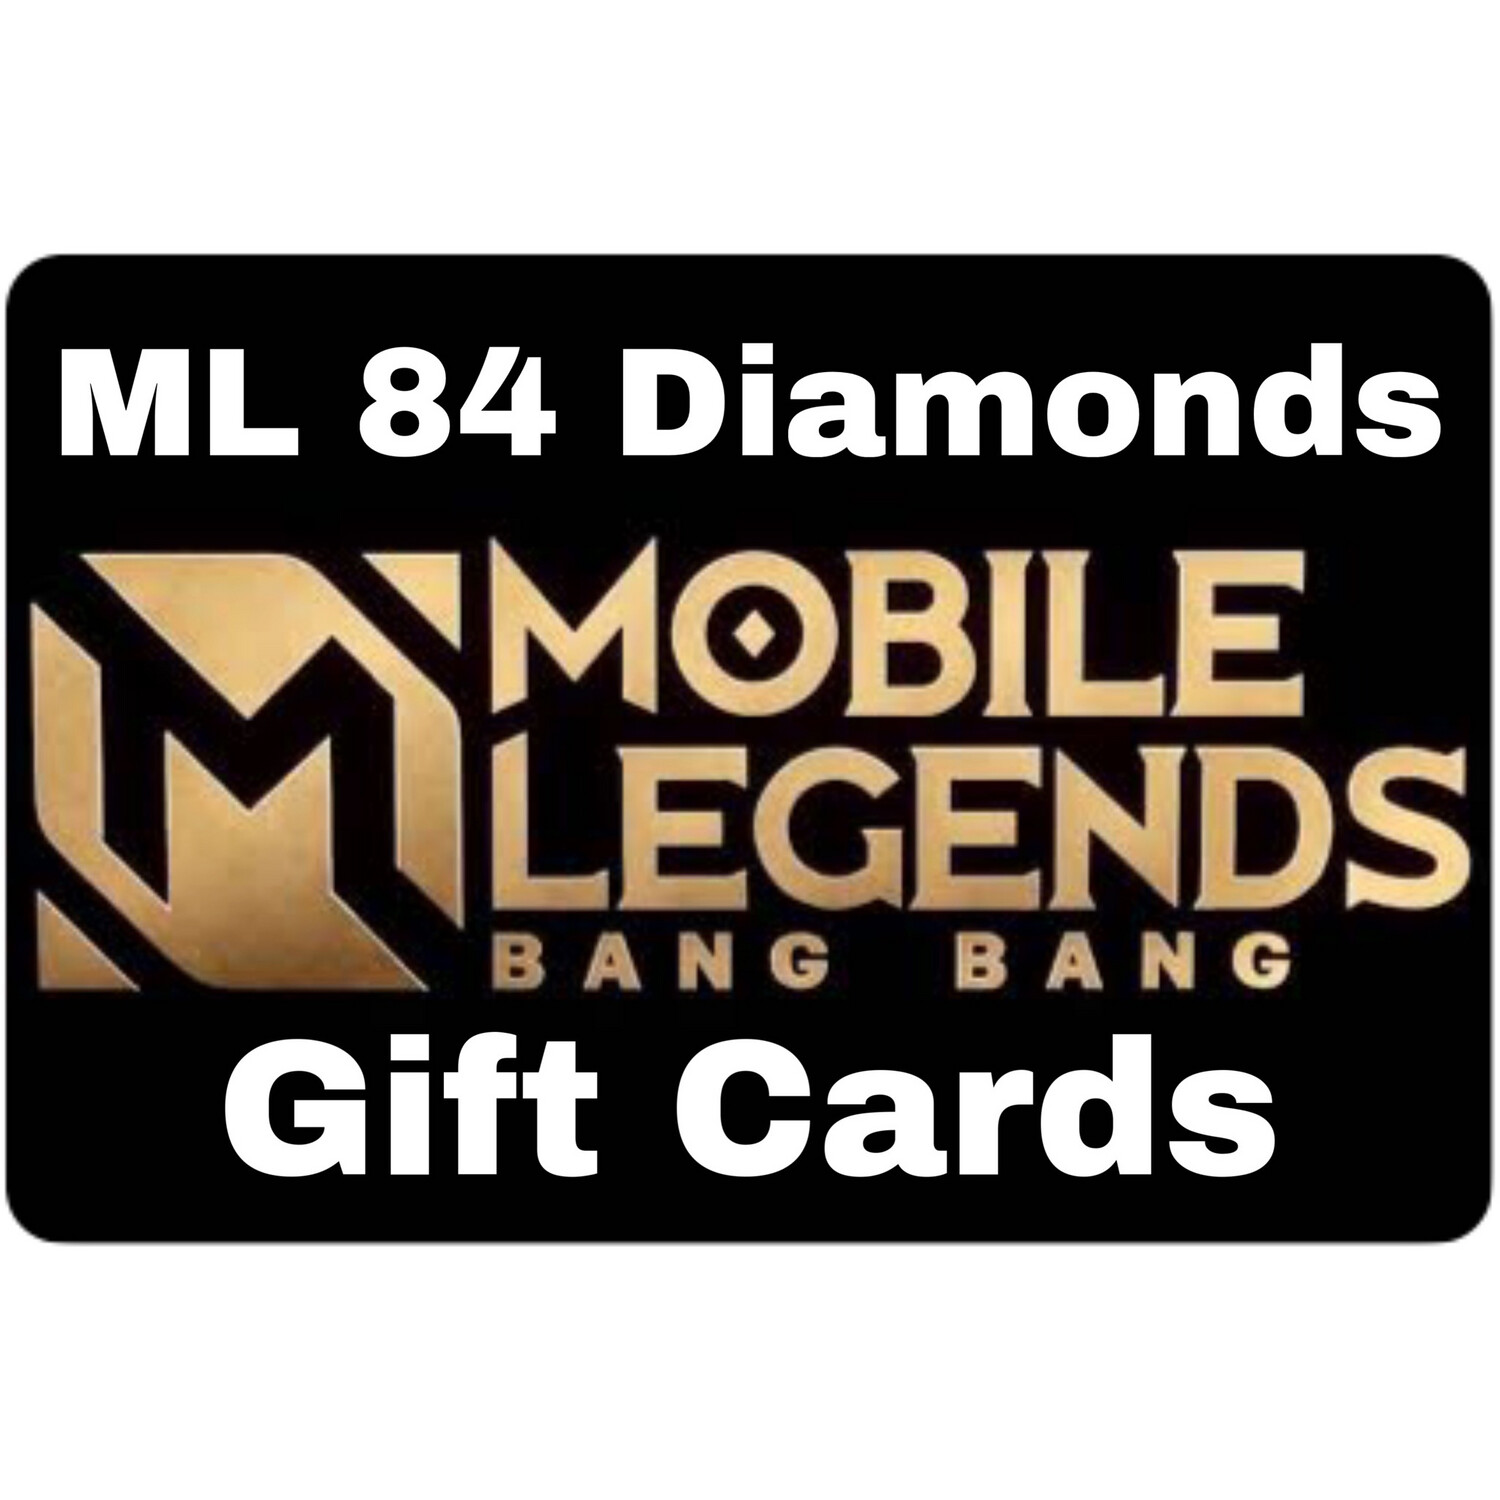 Mobile Legends 84 Diamonds Gift Card